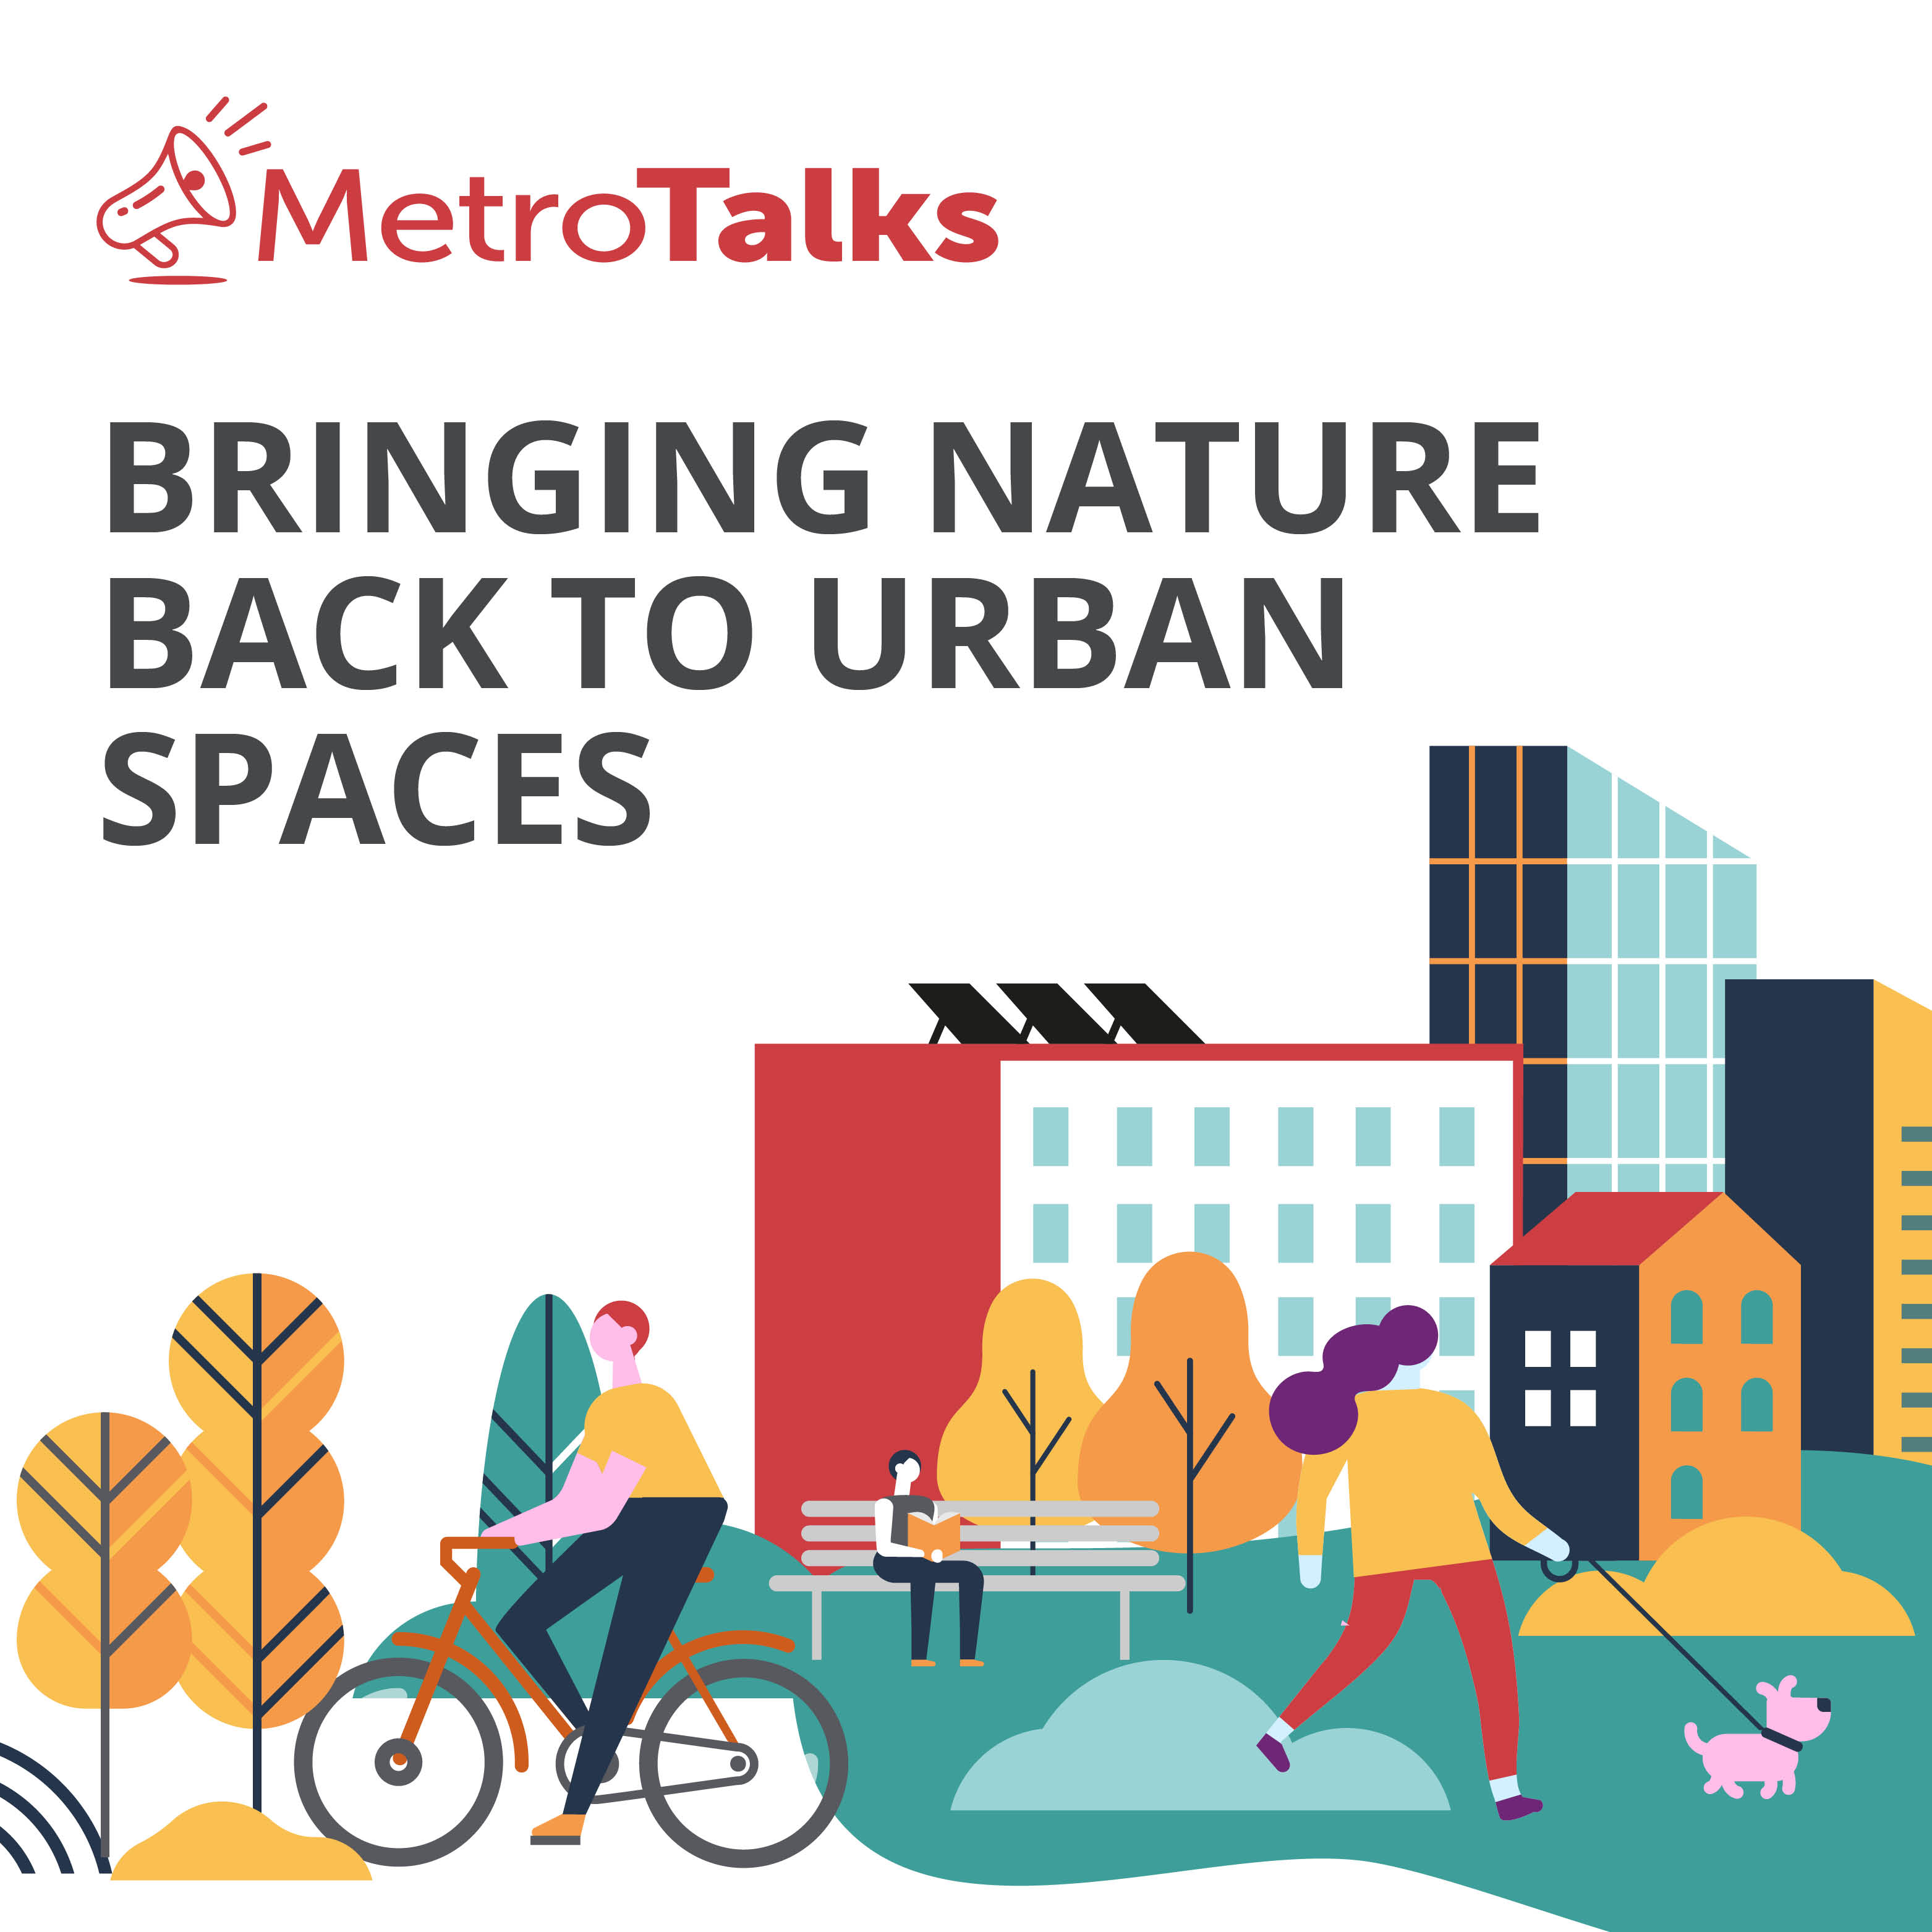 MetroTalks: Bringing nature back to urban spaces